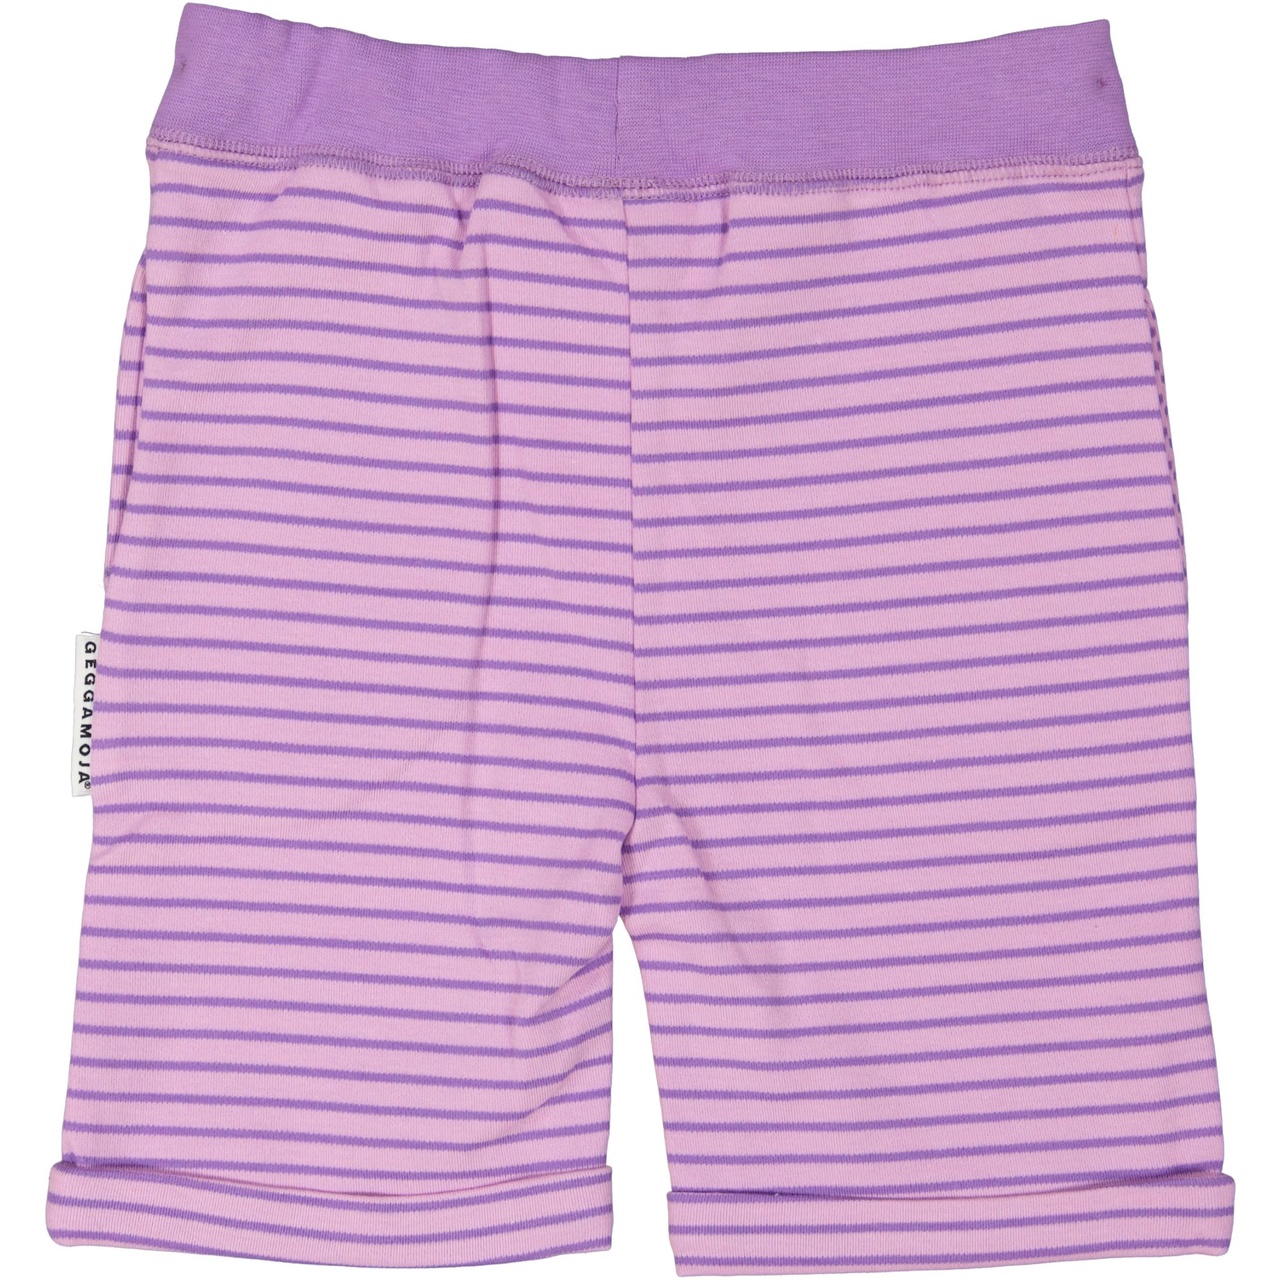 Shorts L.purple/purple  122/128